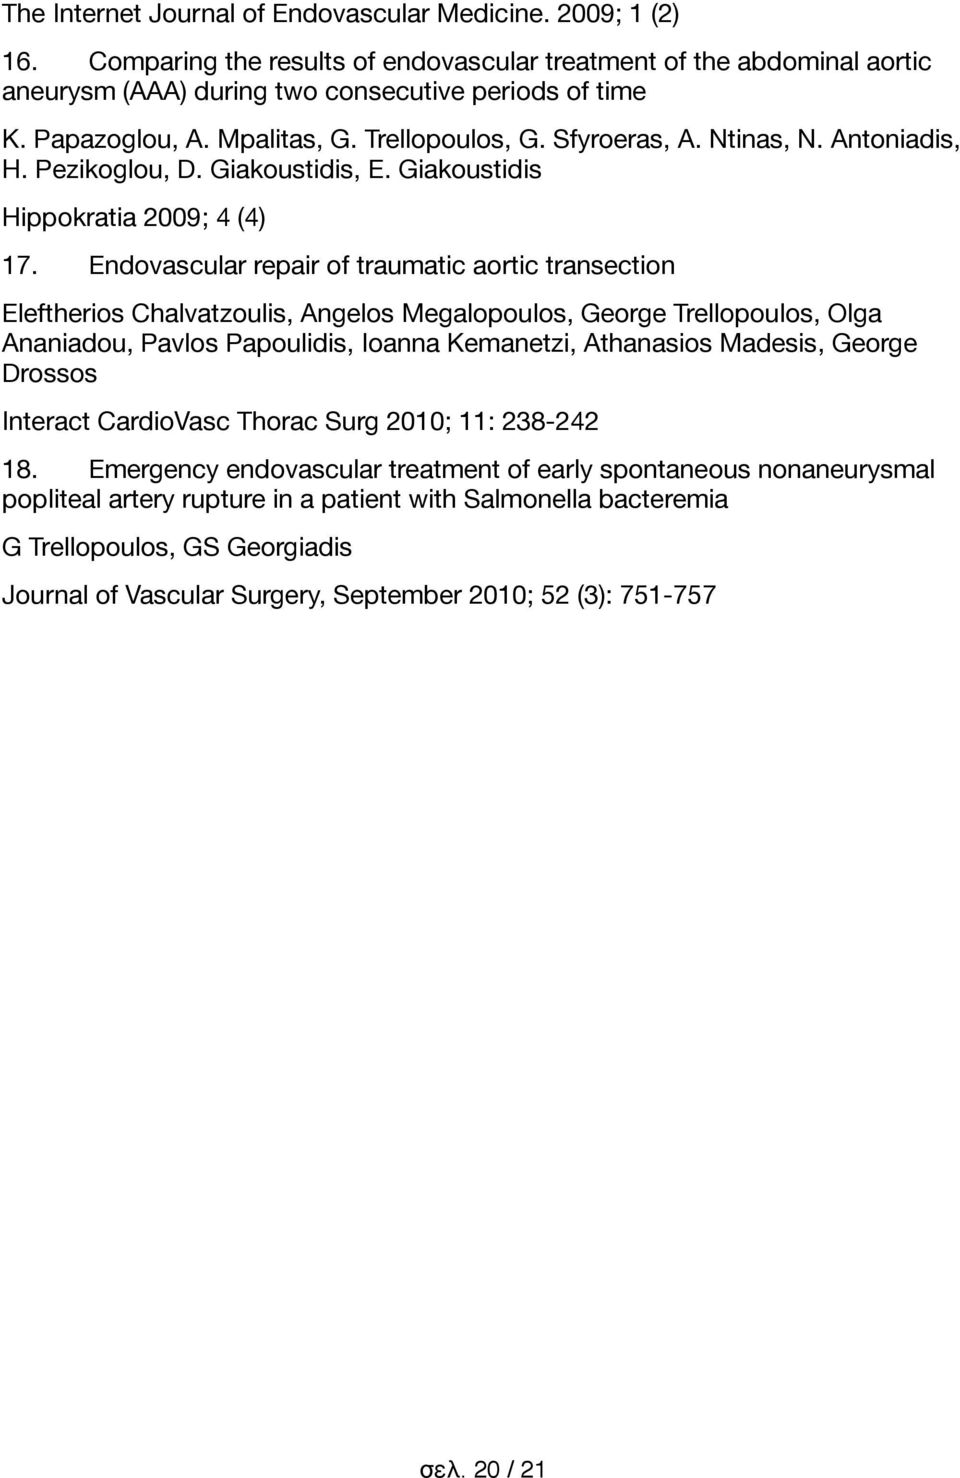 Endovascular repair of traumatic aortic transection Eleftherios Chalvatzoulis, Angelos Megalopoulos, George Trellopoulos, Olga Ananiadou, Pavlos Papoulidis, Ioanna Kemanetzi, Athanasios Madesis,